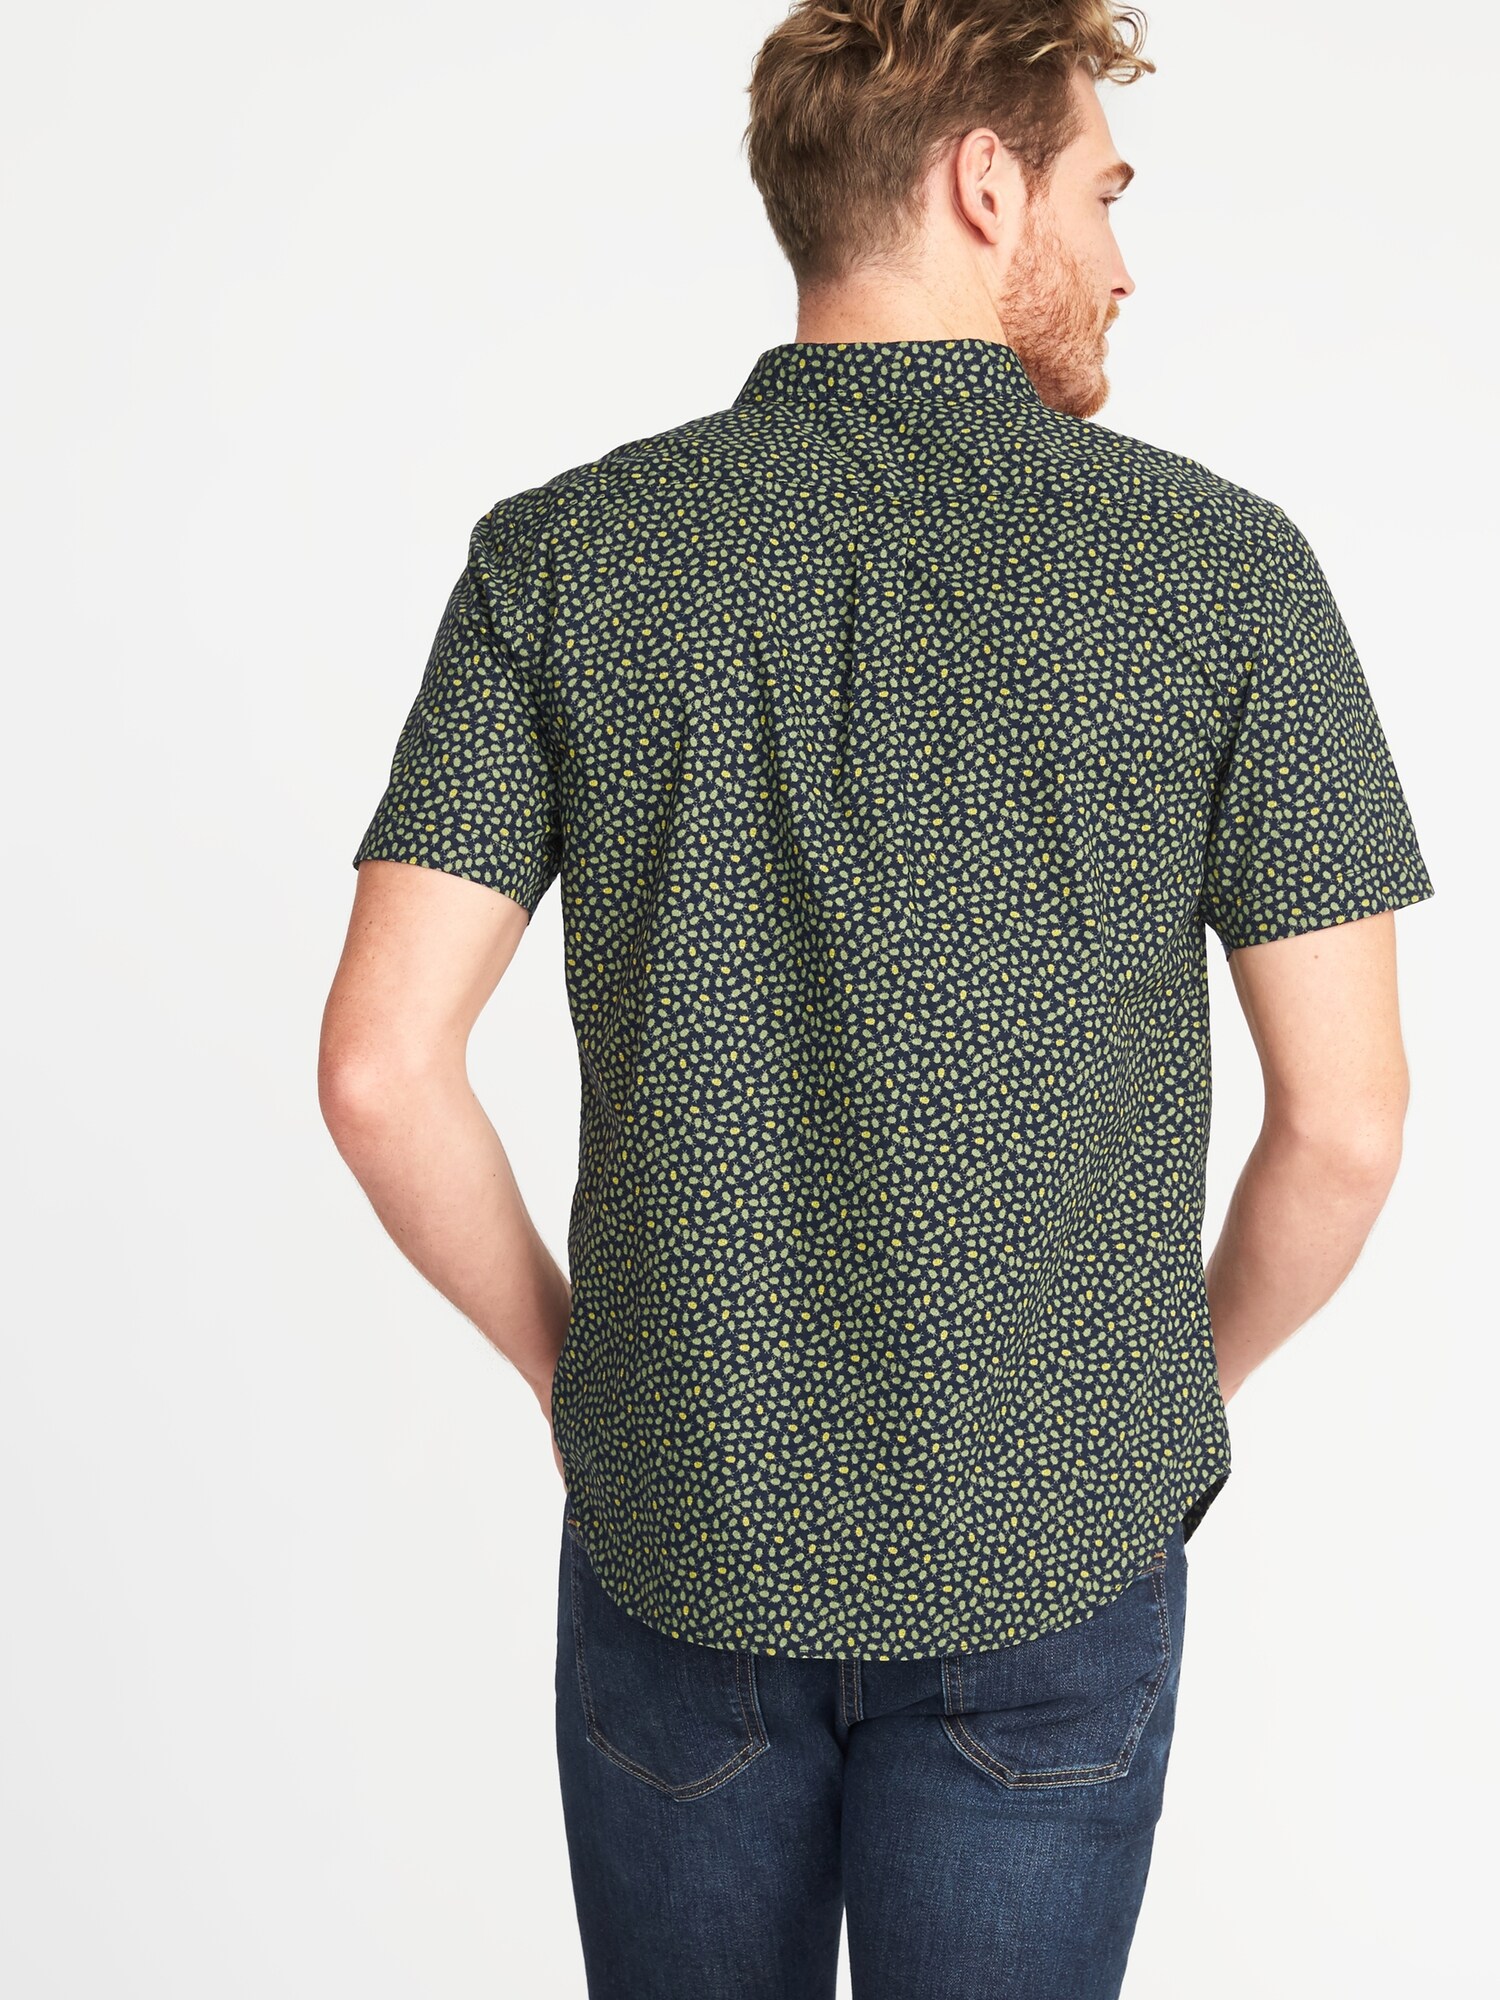 Slim-Fit Built-In Flex Botanical-Print Classic Shirt for Men | Old Navy